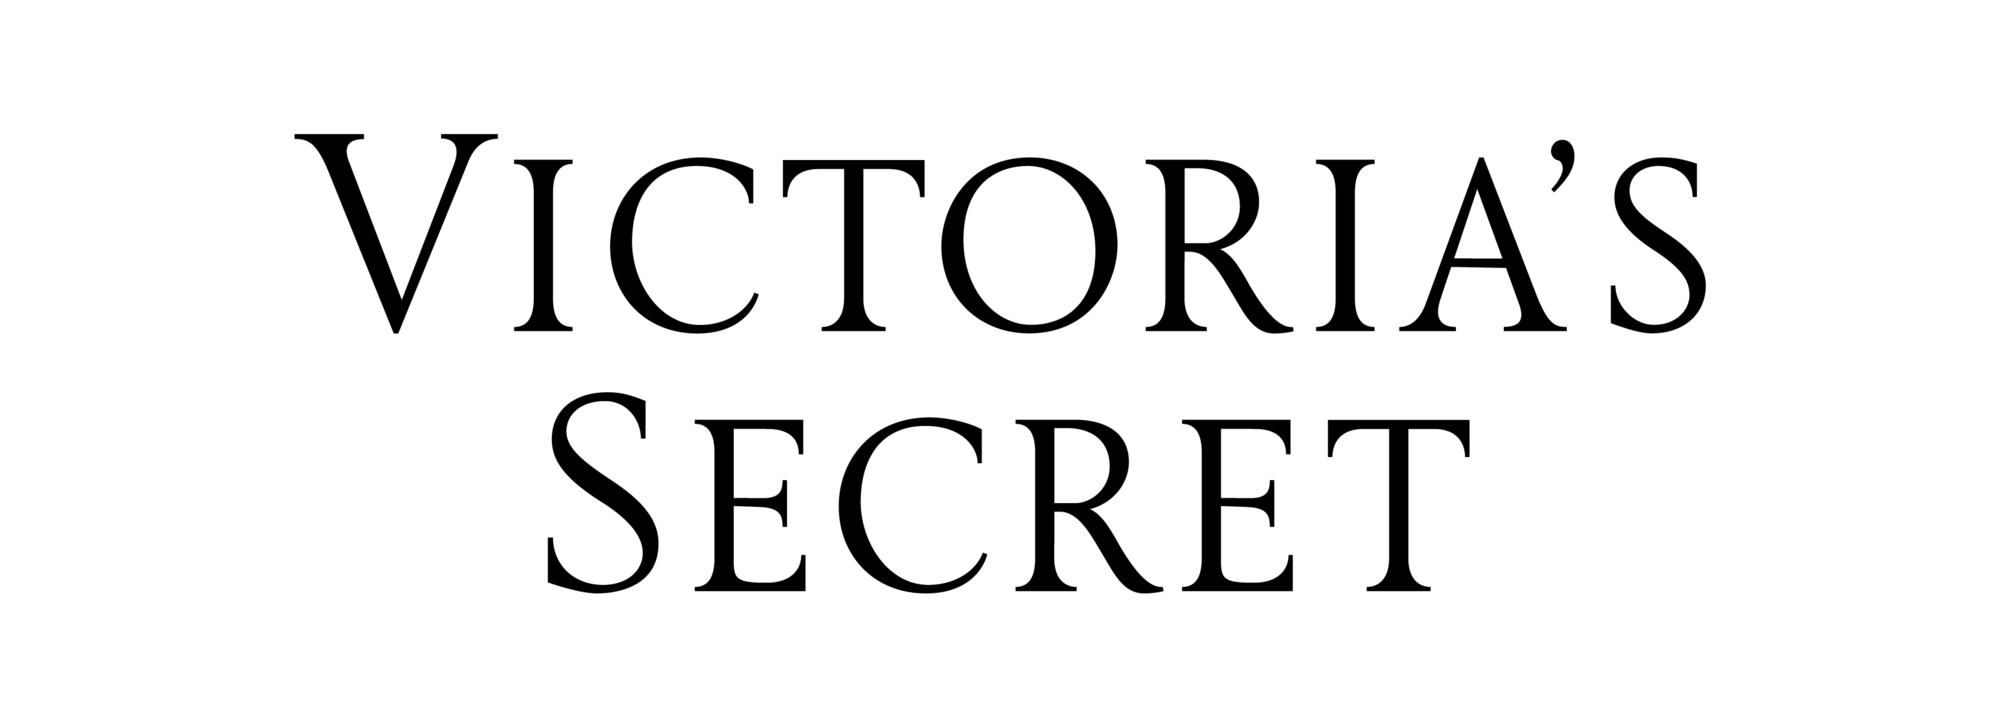 [Retail] Victoria's Secret